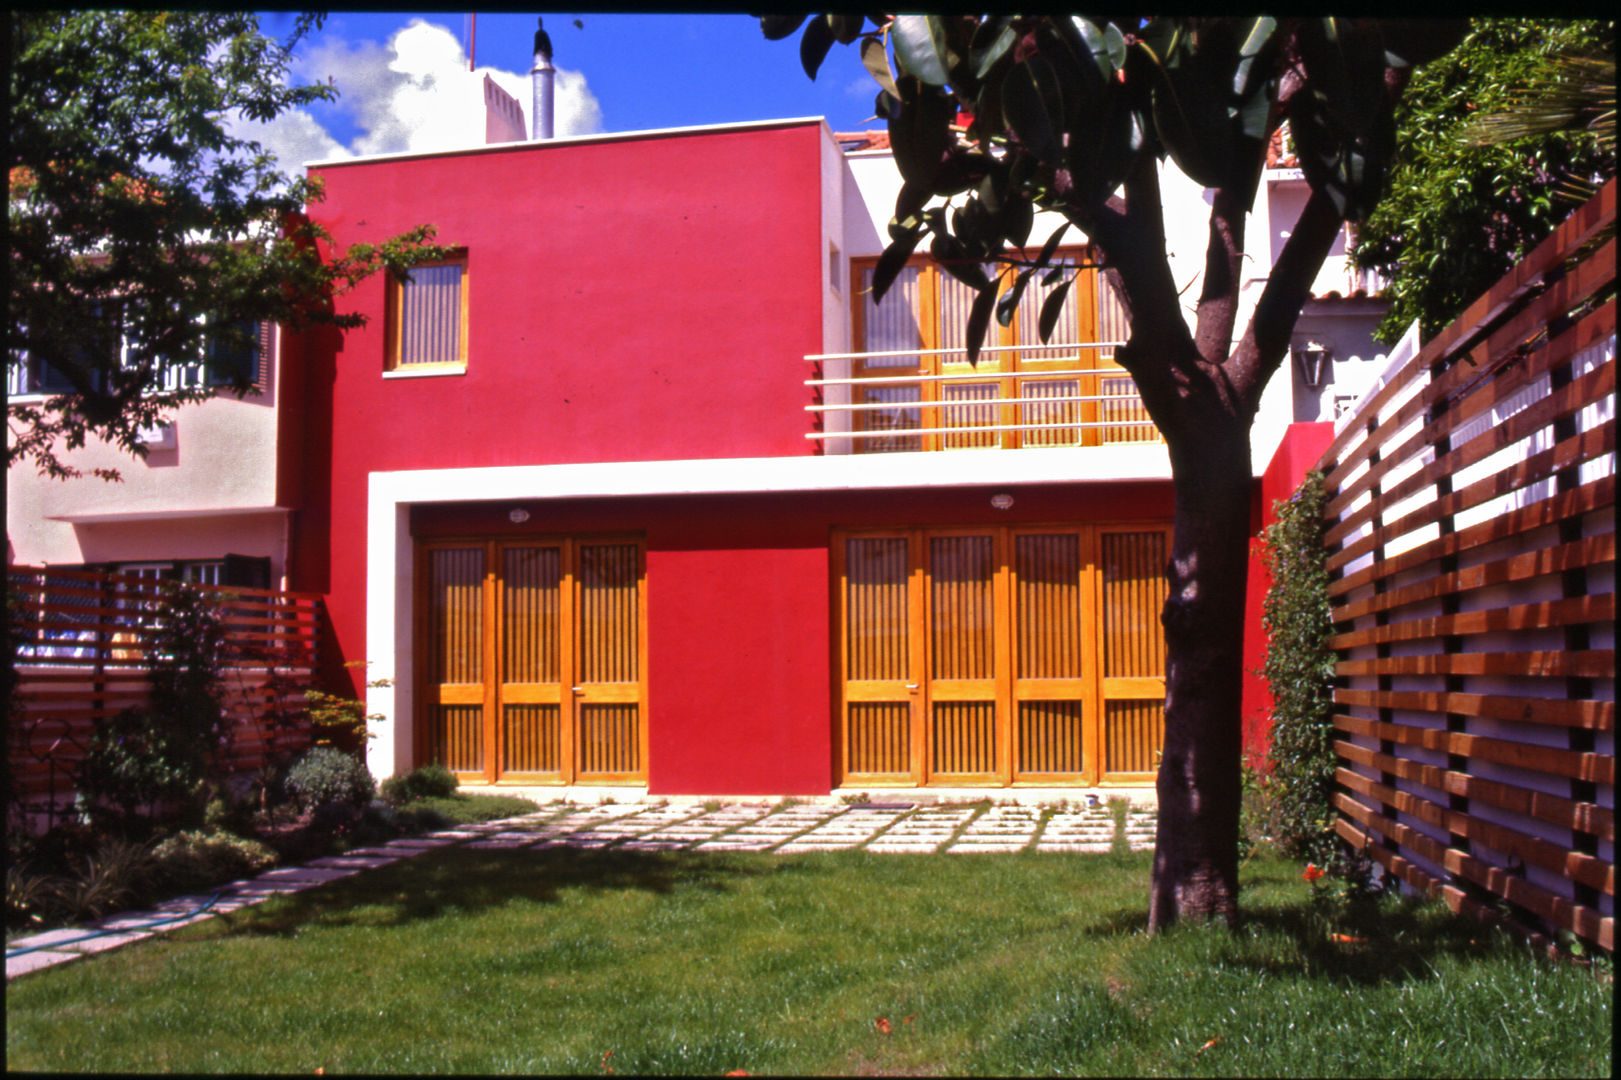 Casa no Restelo, Borges de Macedo, Arquitectura. Borges de Macedo, Arquitectura. Modern home